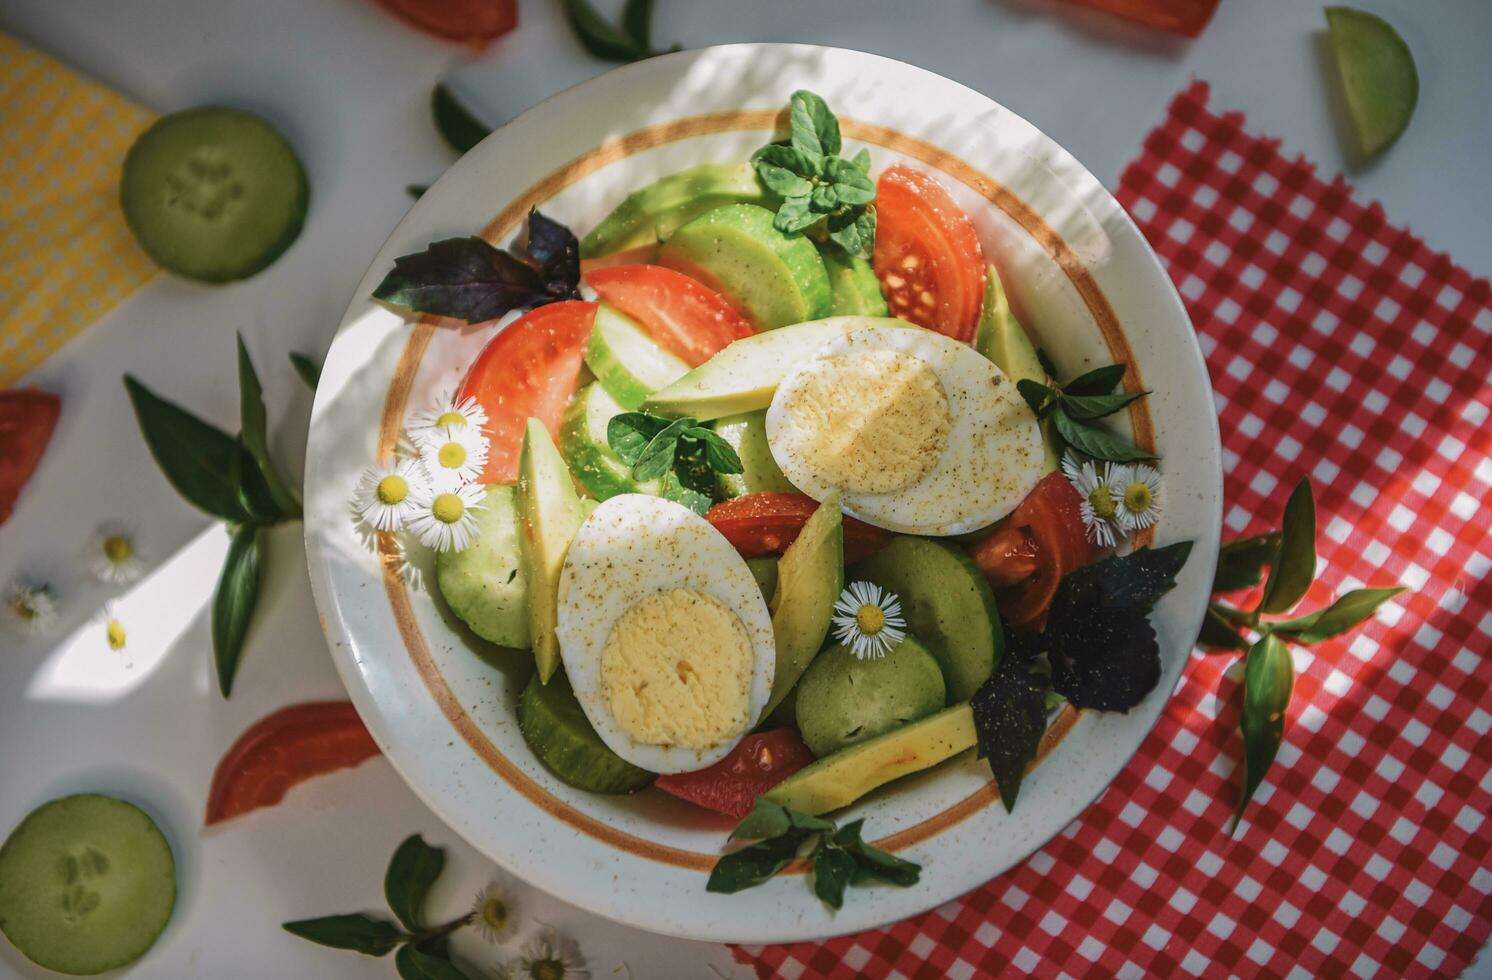 petit déjeuner avec Oeuf et légume salade photo